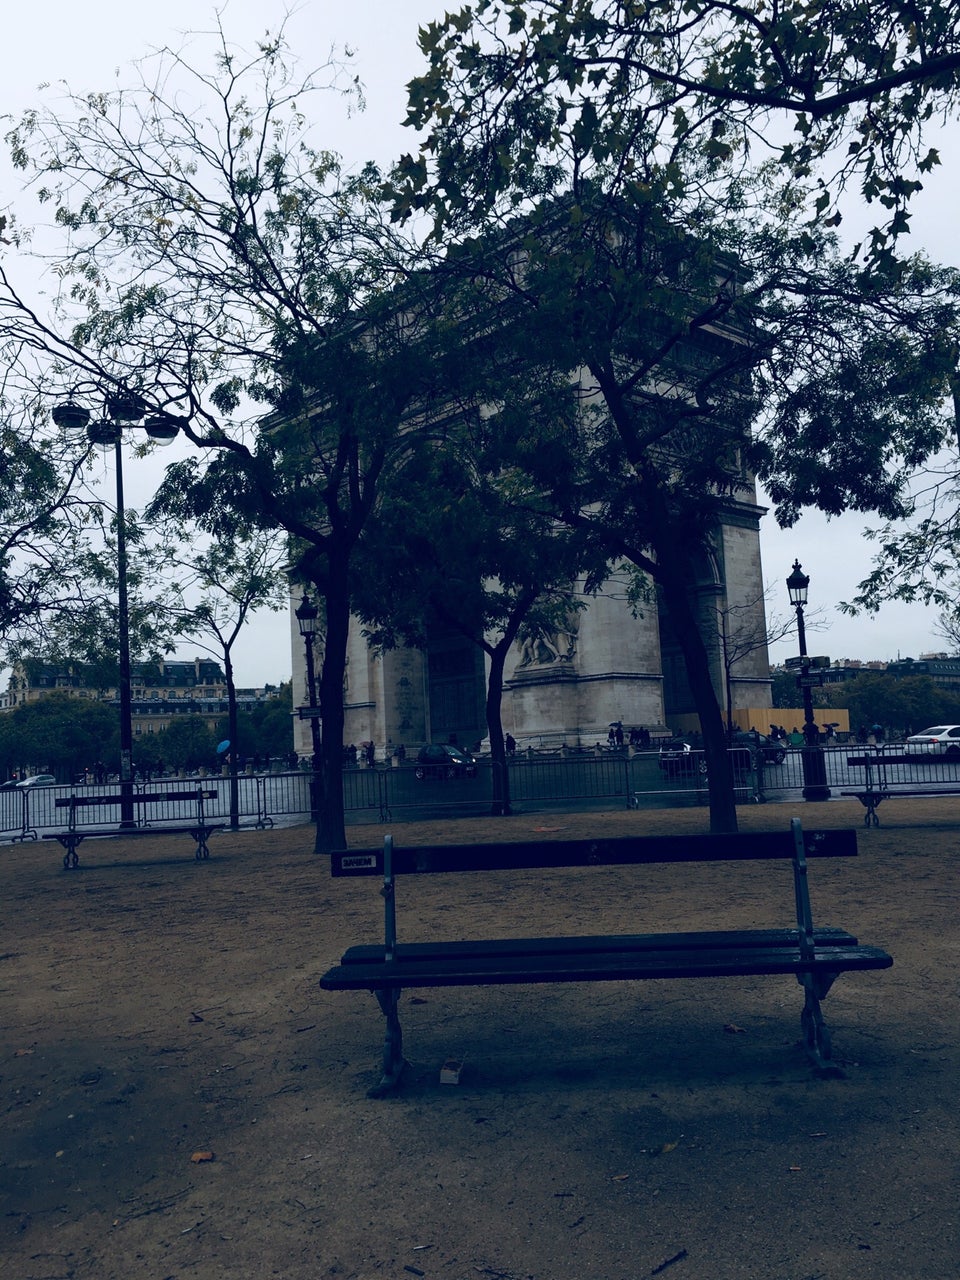 Photo of Arc de Triomphe